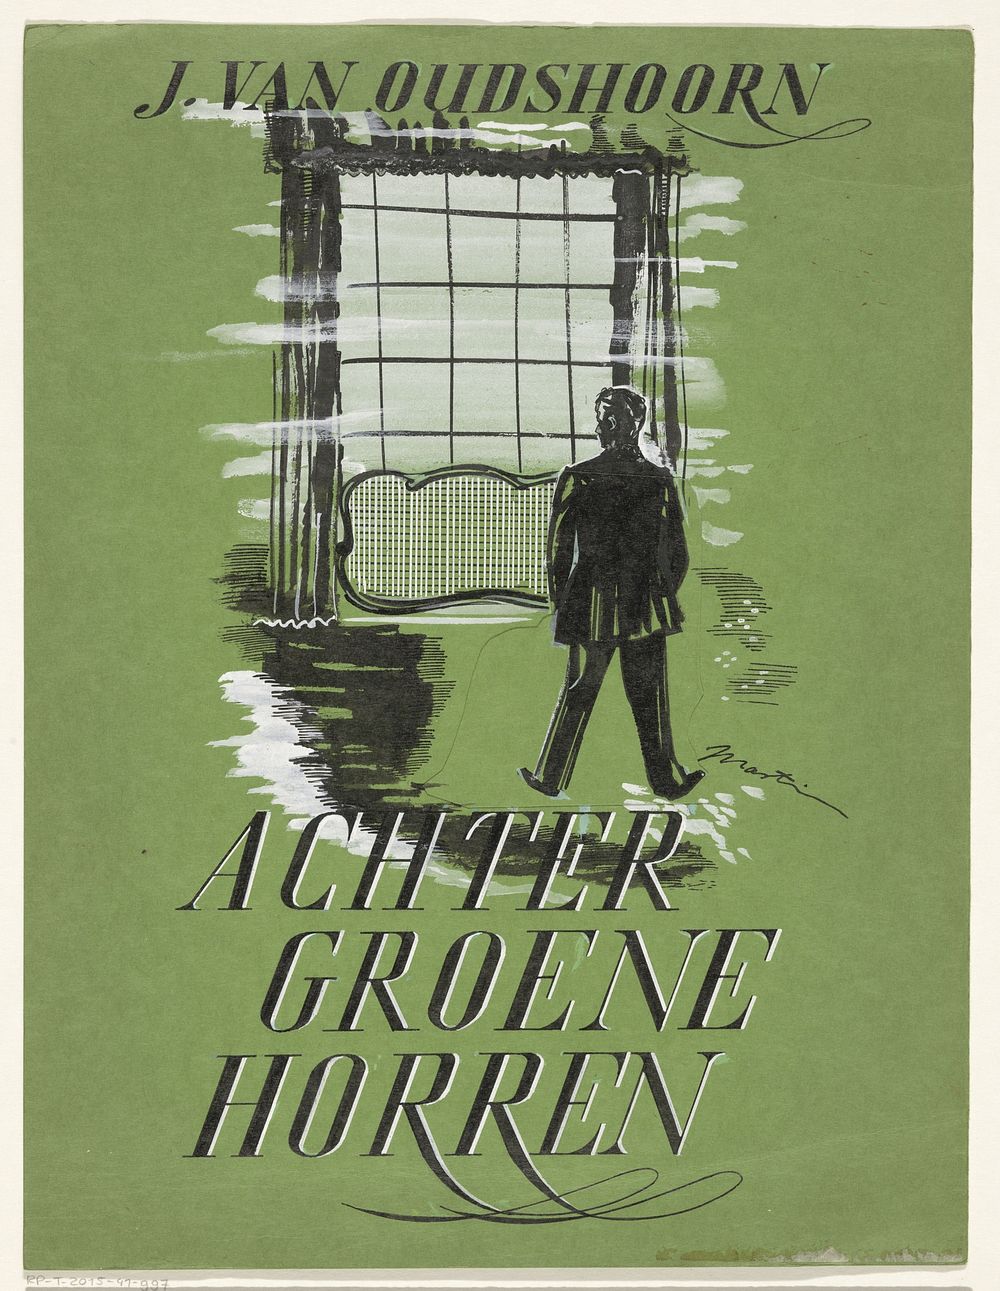 Bandontwerp voor: J. van Oudshoorn, Achter groene horren, 1943-1945 (in or before 1943 - in or before 1945) by Martin Horwitz